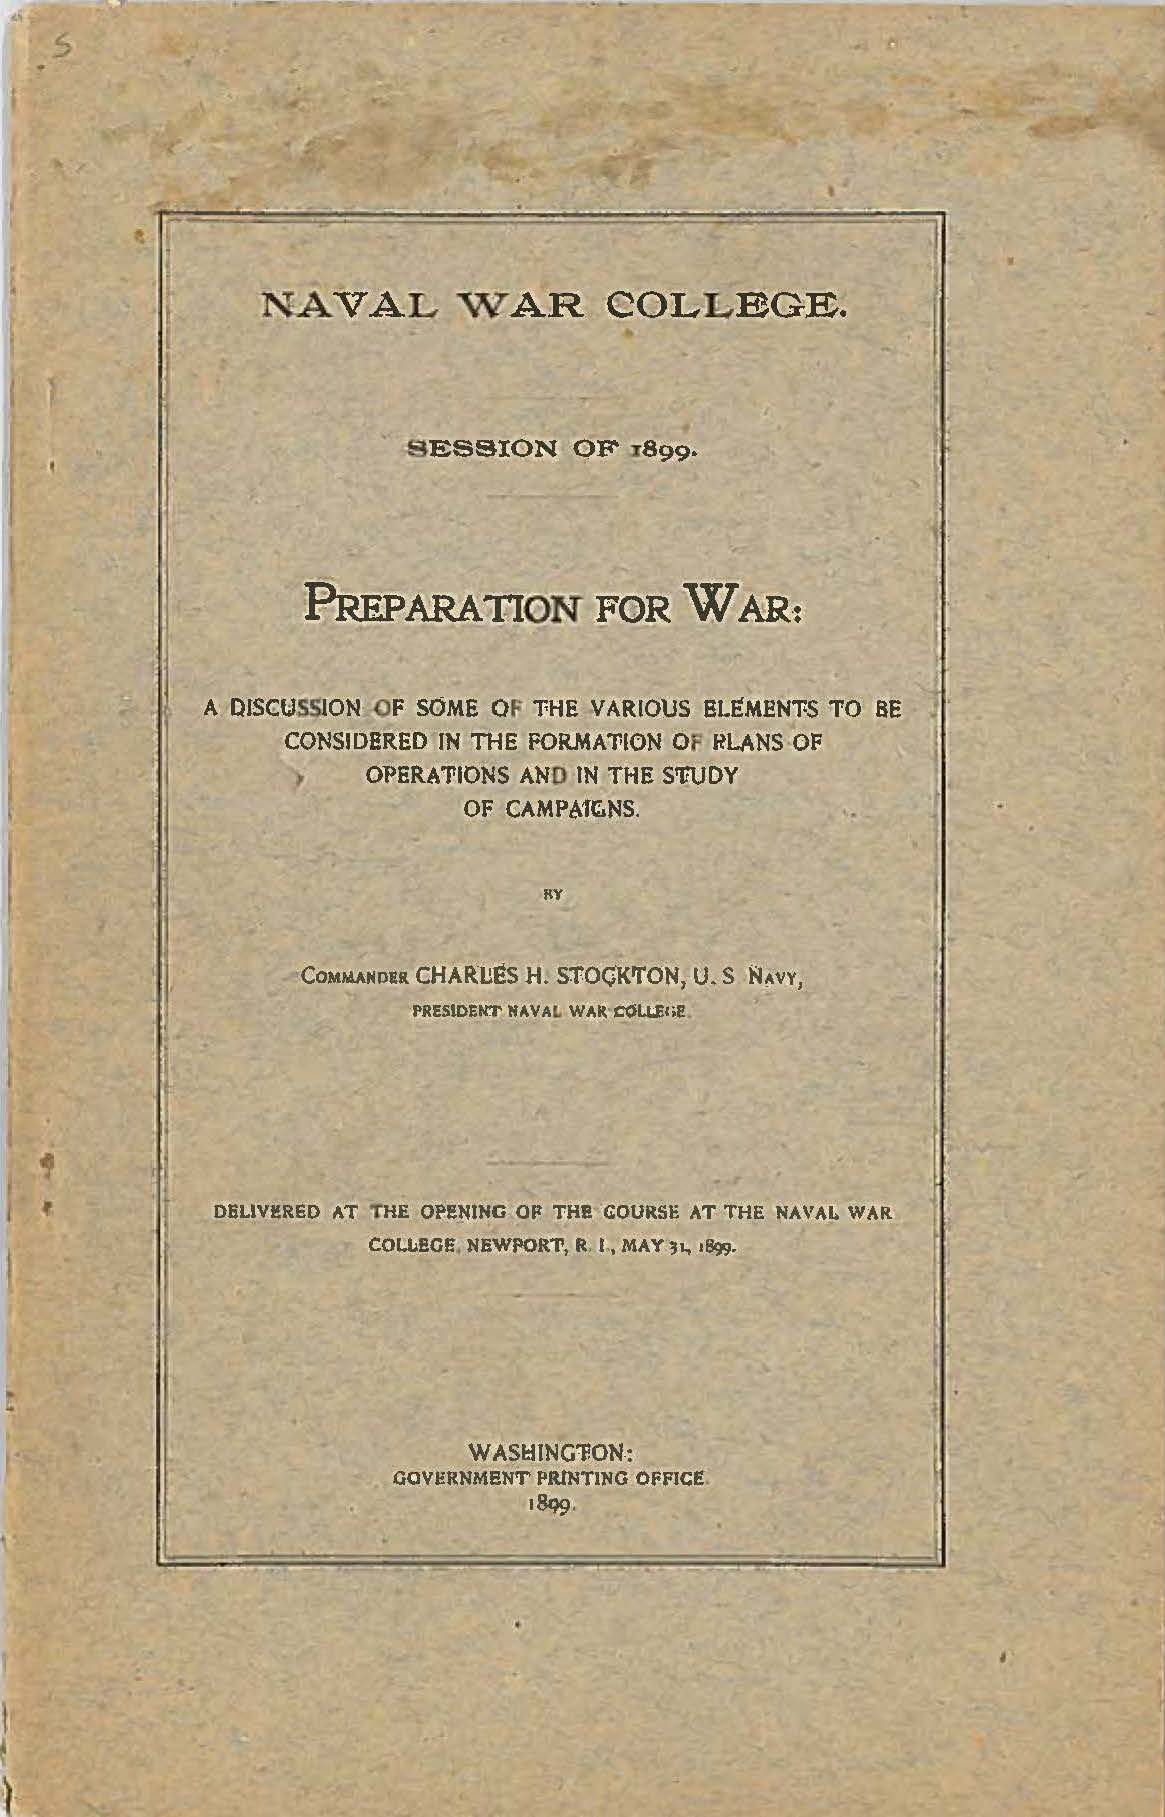 Preparation for War, Charles H. Stockton